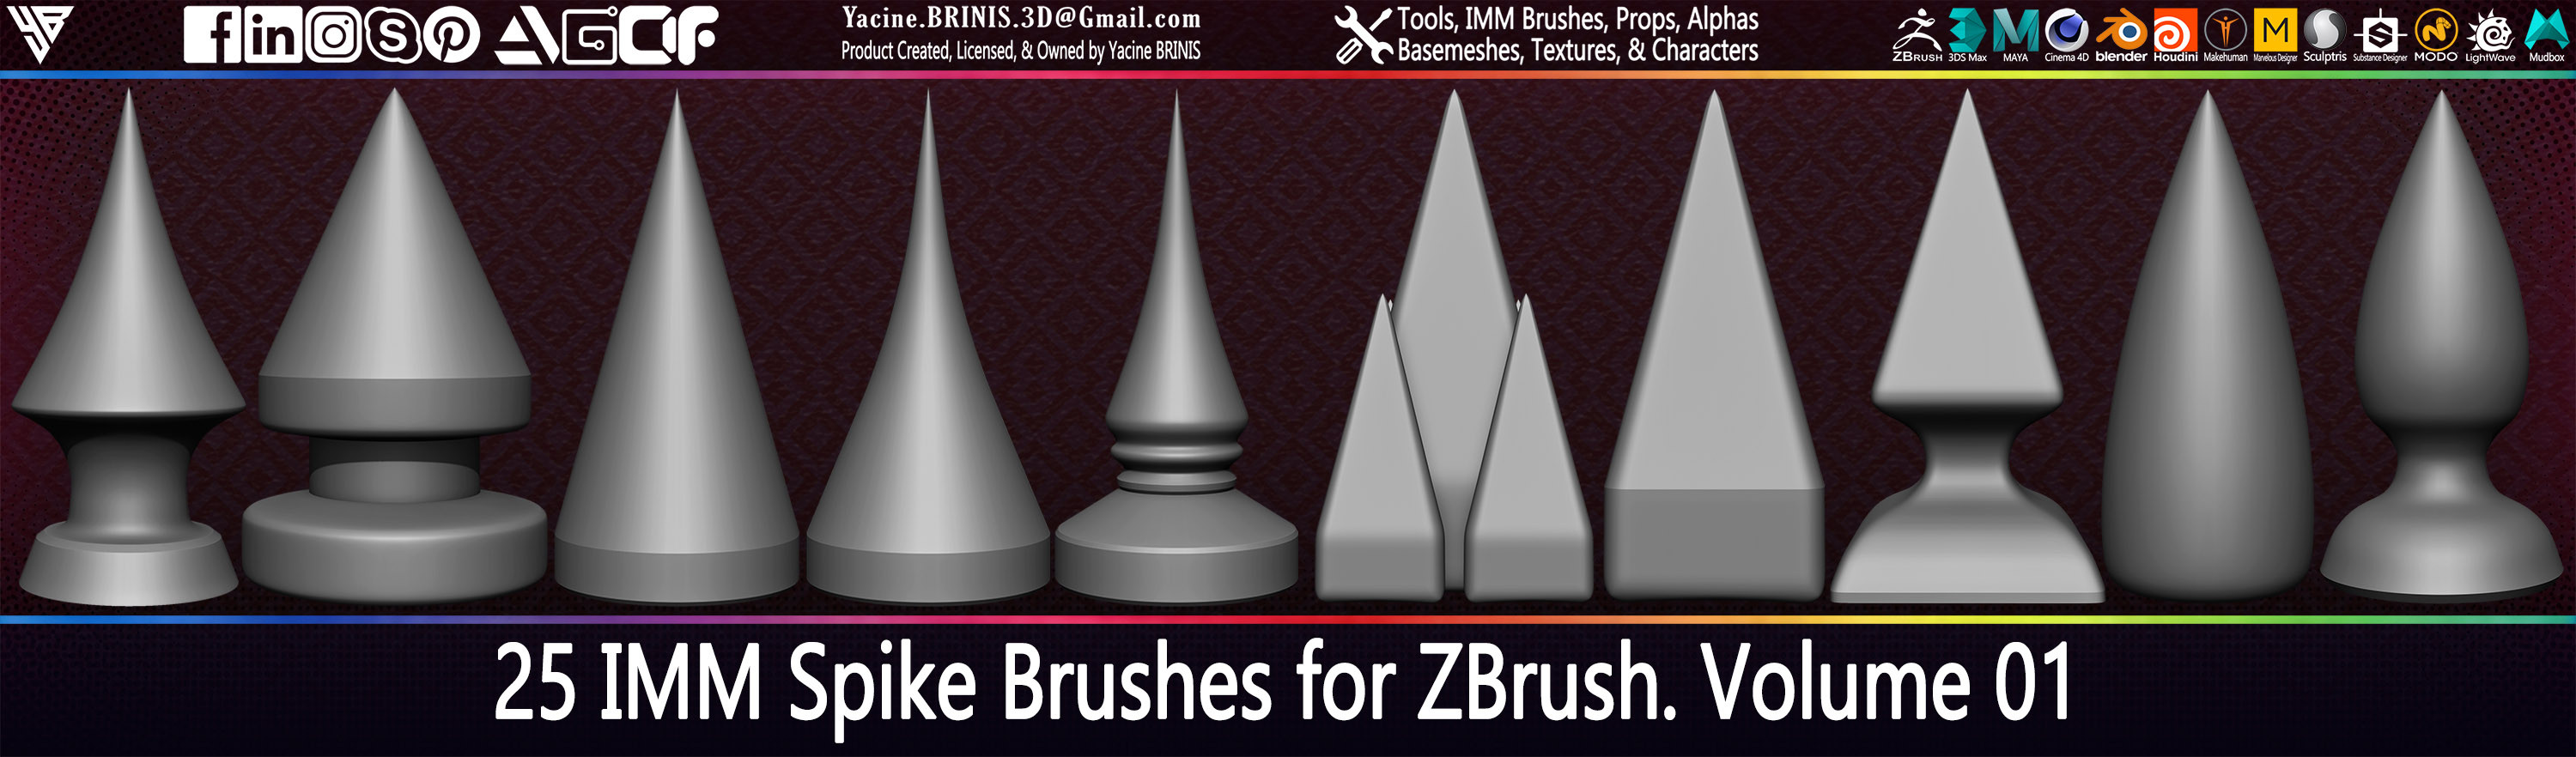 25 imm Spike Brushes for ZBrush By Yacine BRINIS Vol 01 Set 014